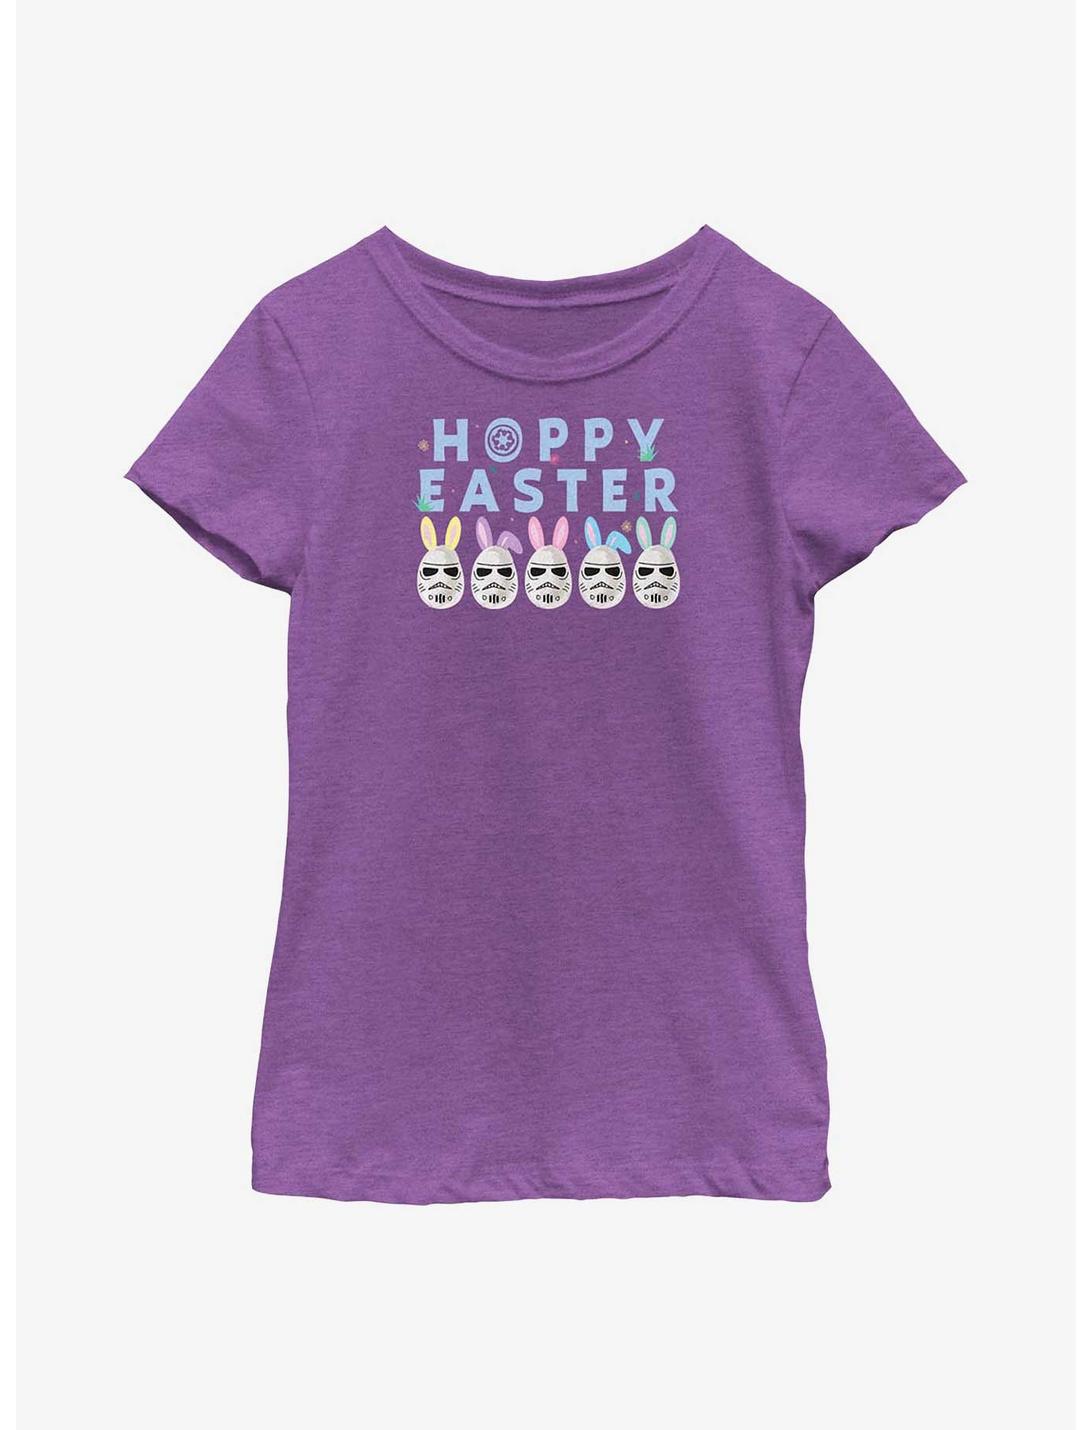 Star Wars Hoppy Easter Egg Stormtrooper Youth Girls T-Shirt, PURPLE BERRY, hi-res